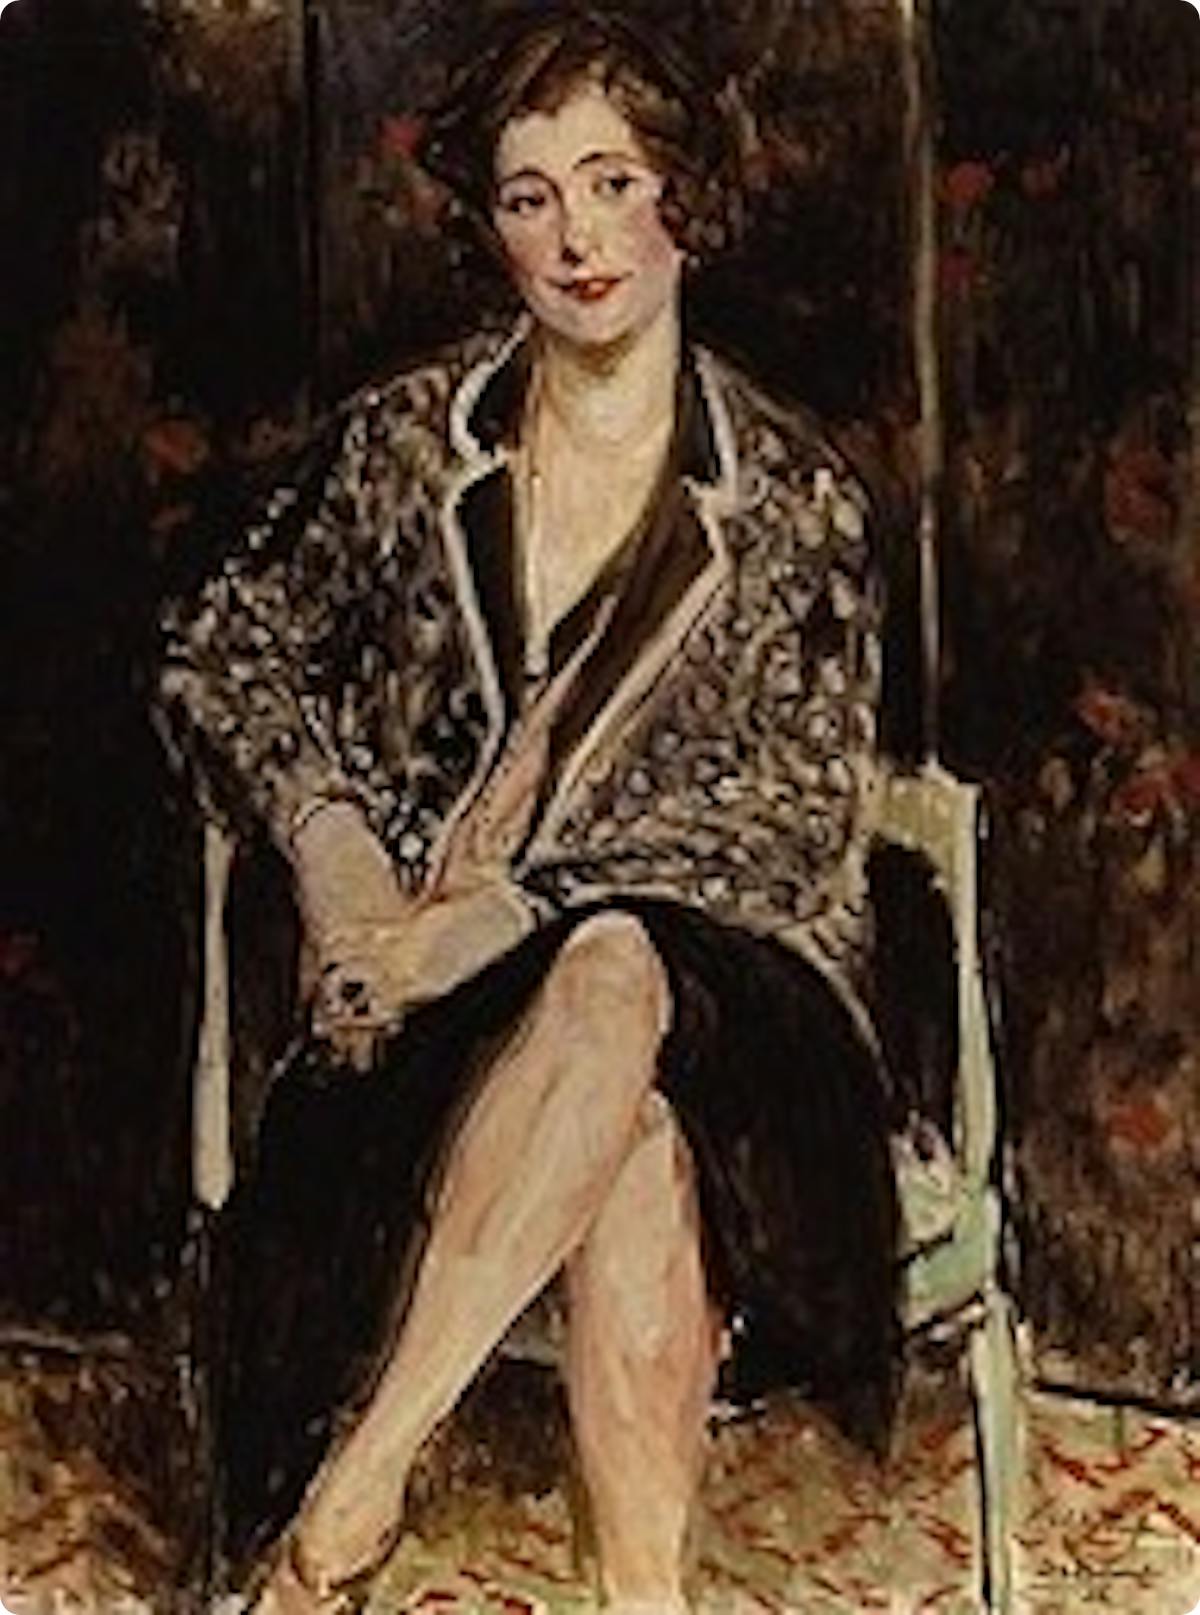 Violet by Jacques-Emile Blanche (1861-1942).